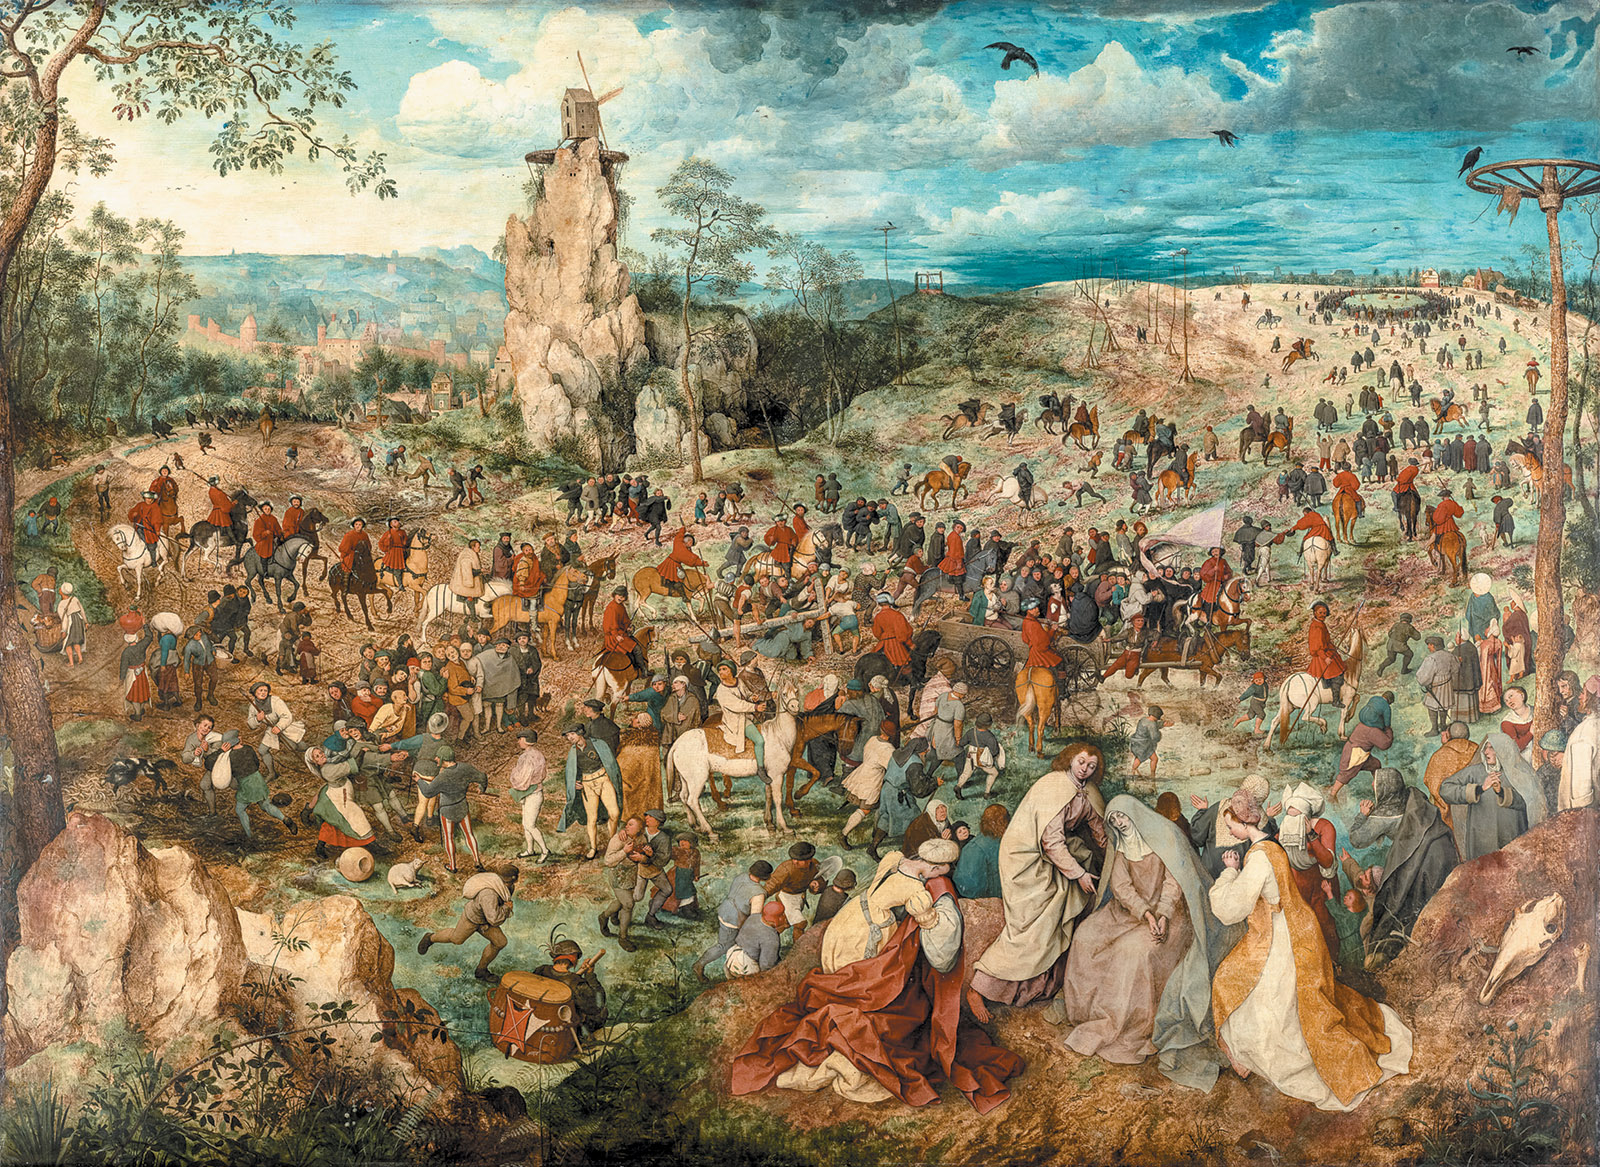 Christ Carrying the Cross by Pieter Bruegel the Elder